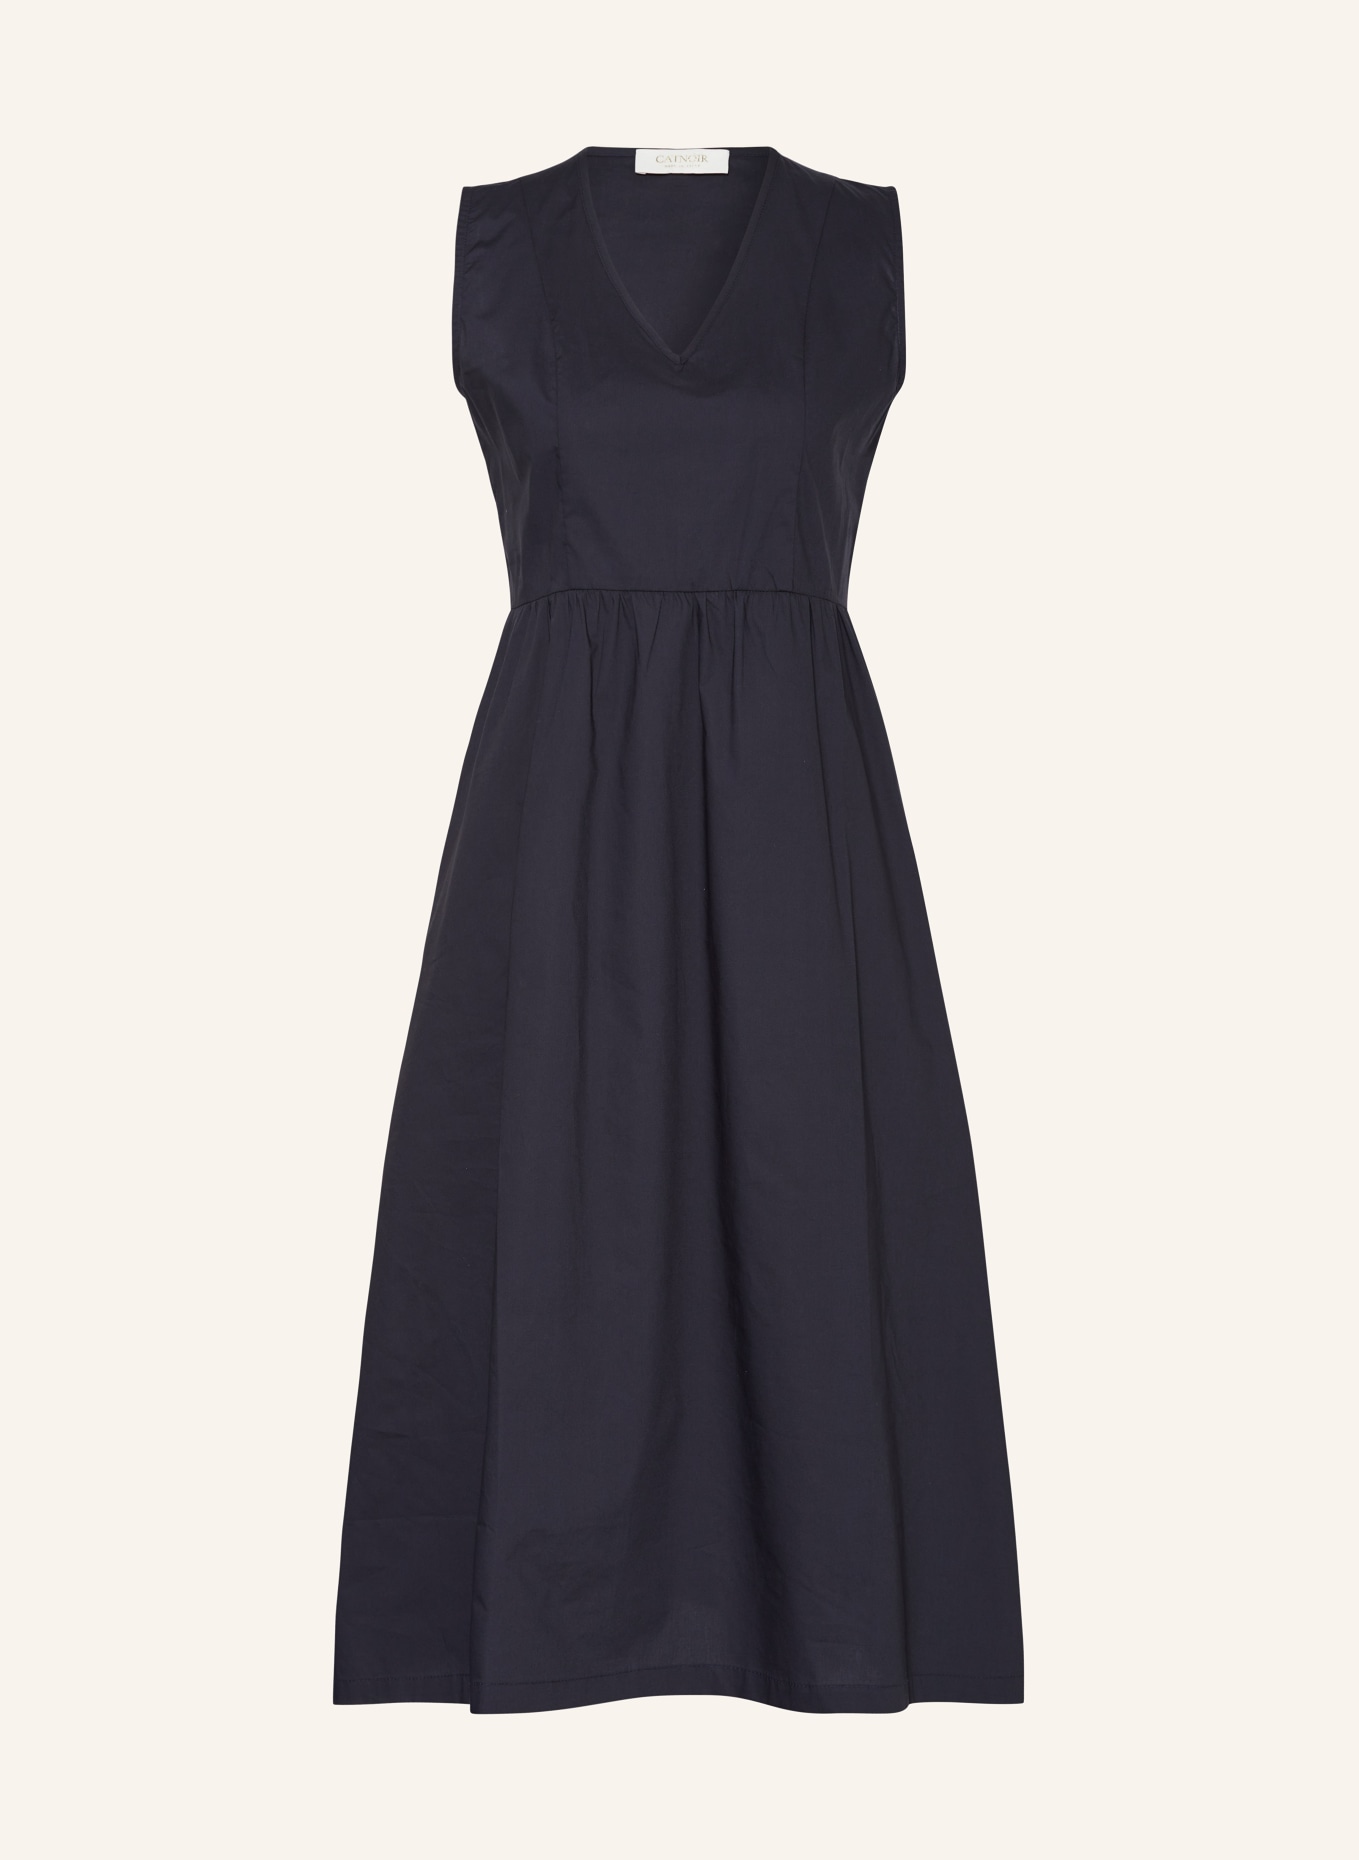 CATNOIR Kleid, Farbe: DUNKELBLAU (Bild 1)